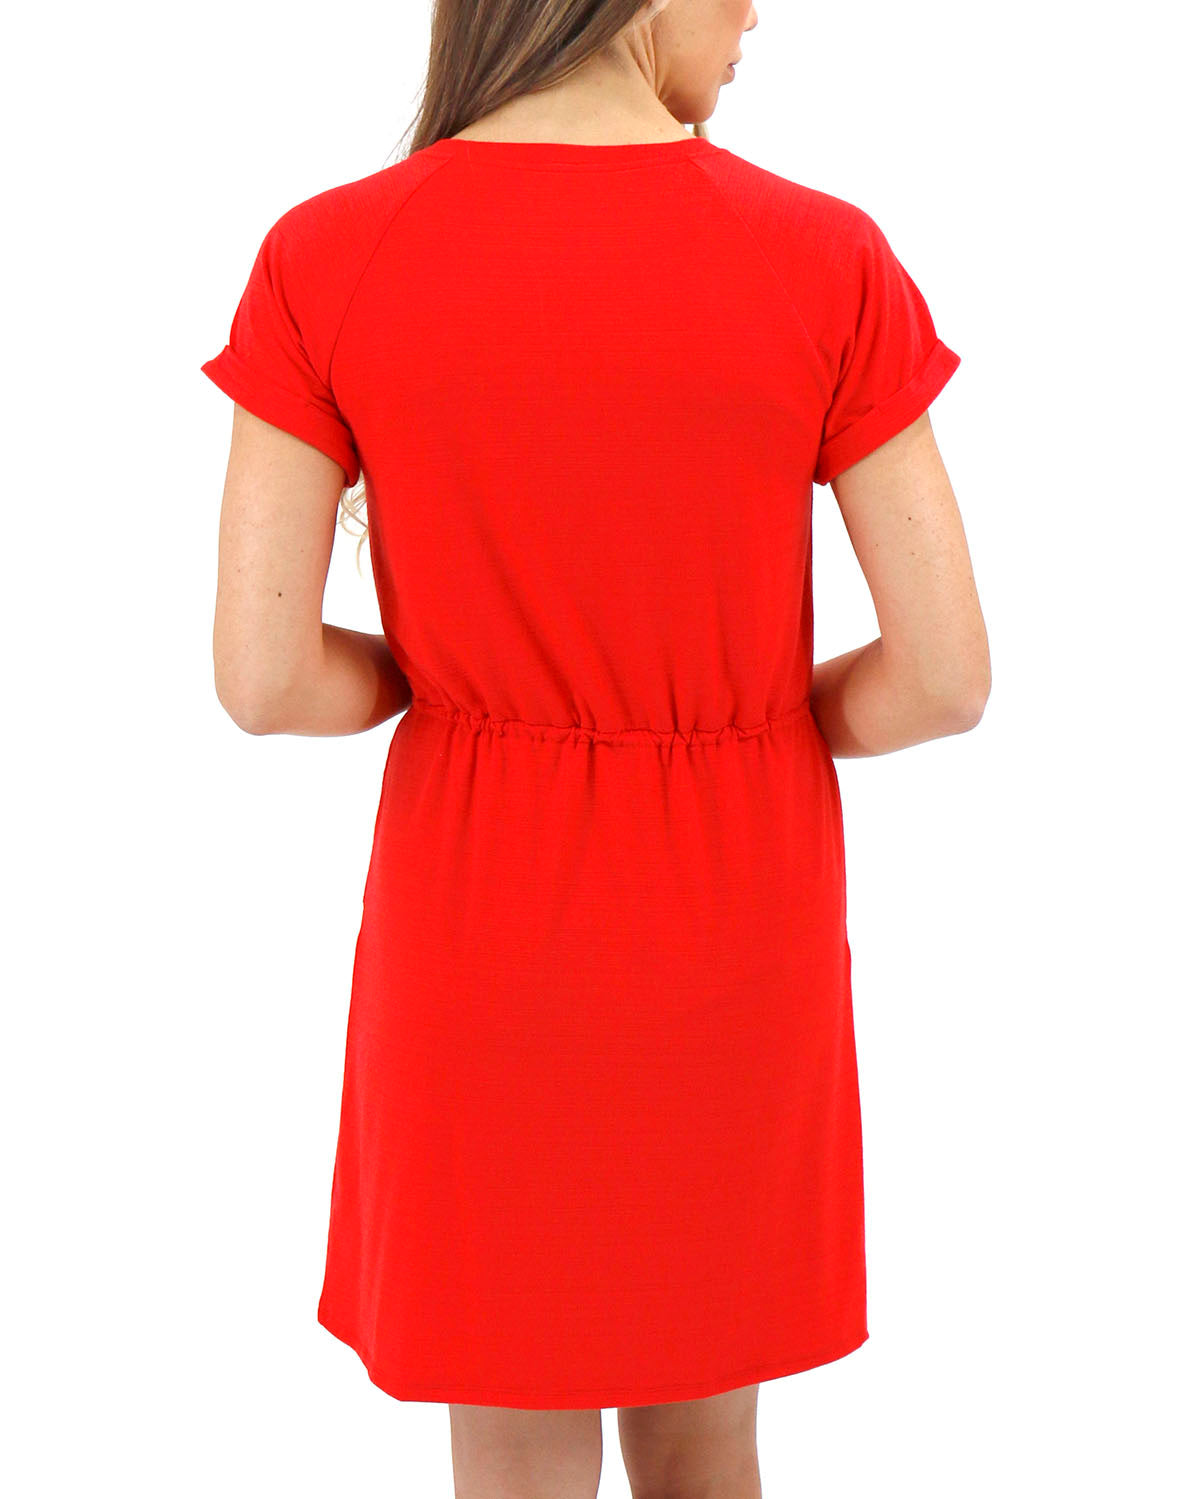 Raglan Tee Dress in Hot Red